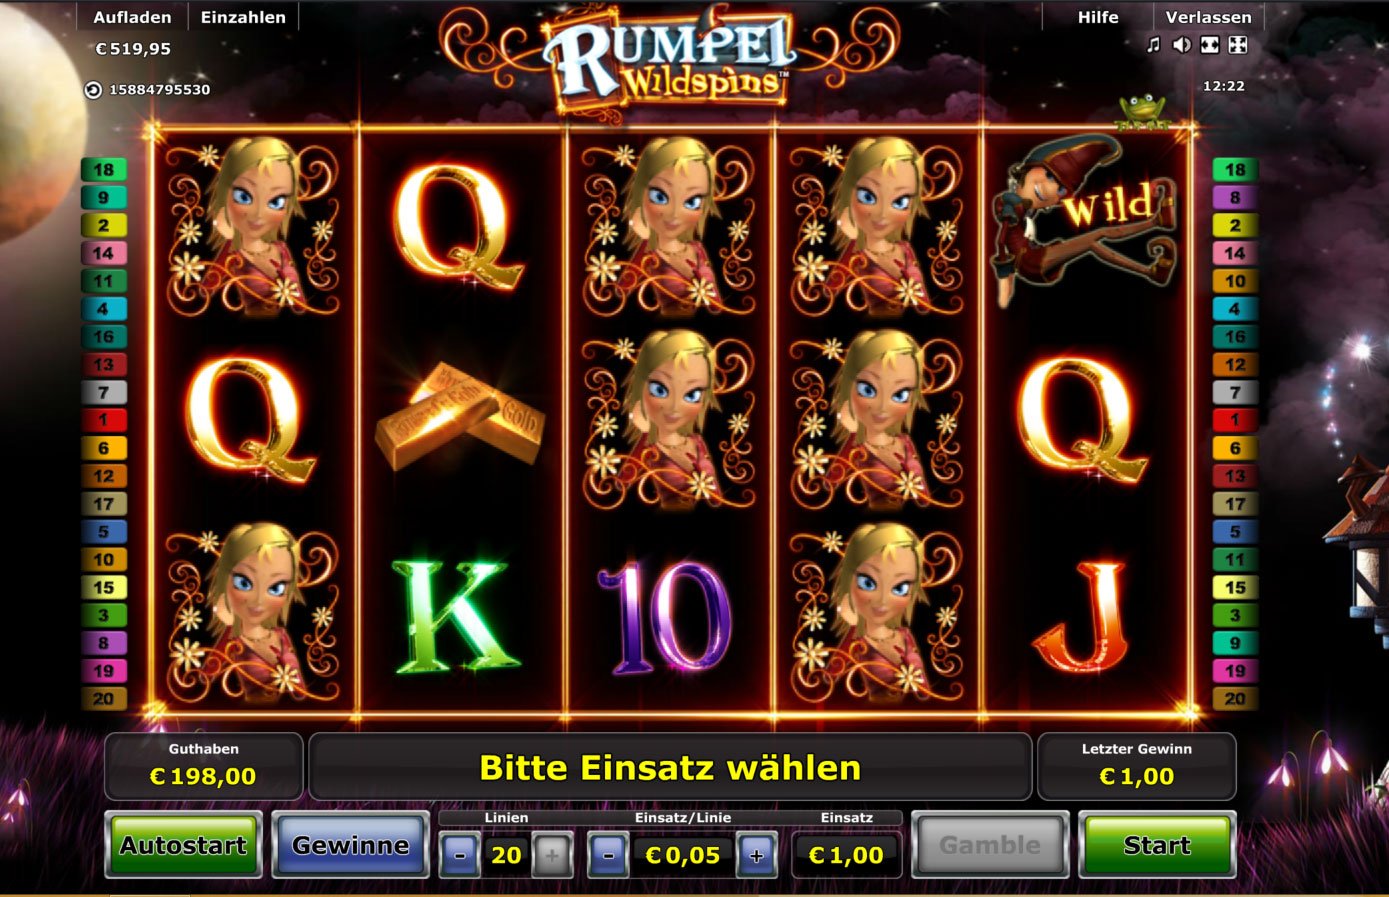 Double rich casino slots